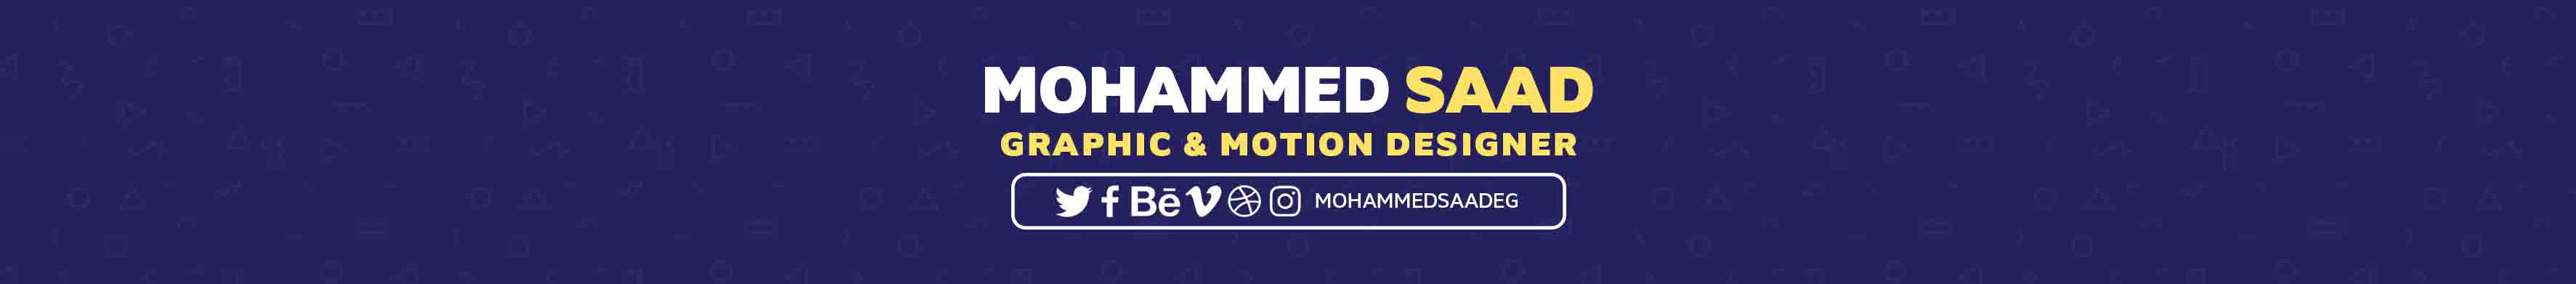 Баннер профиля Mohammed Saad